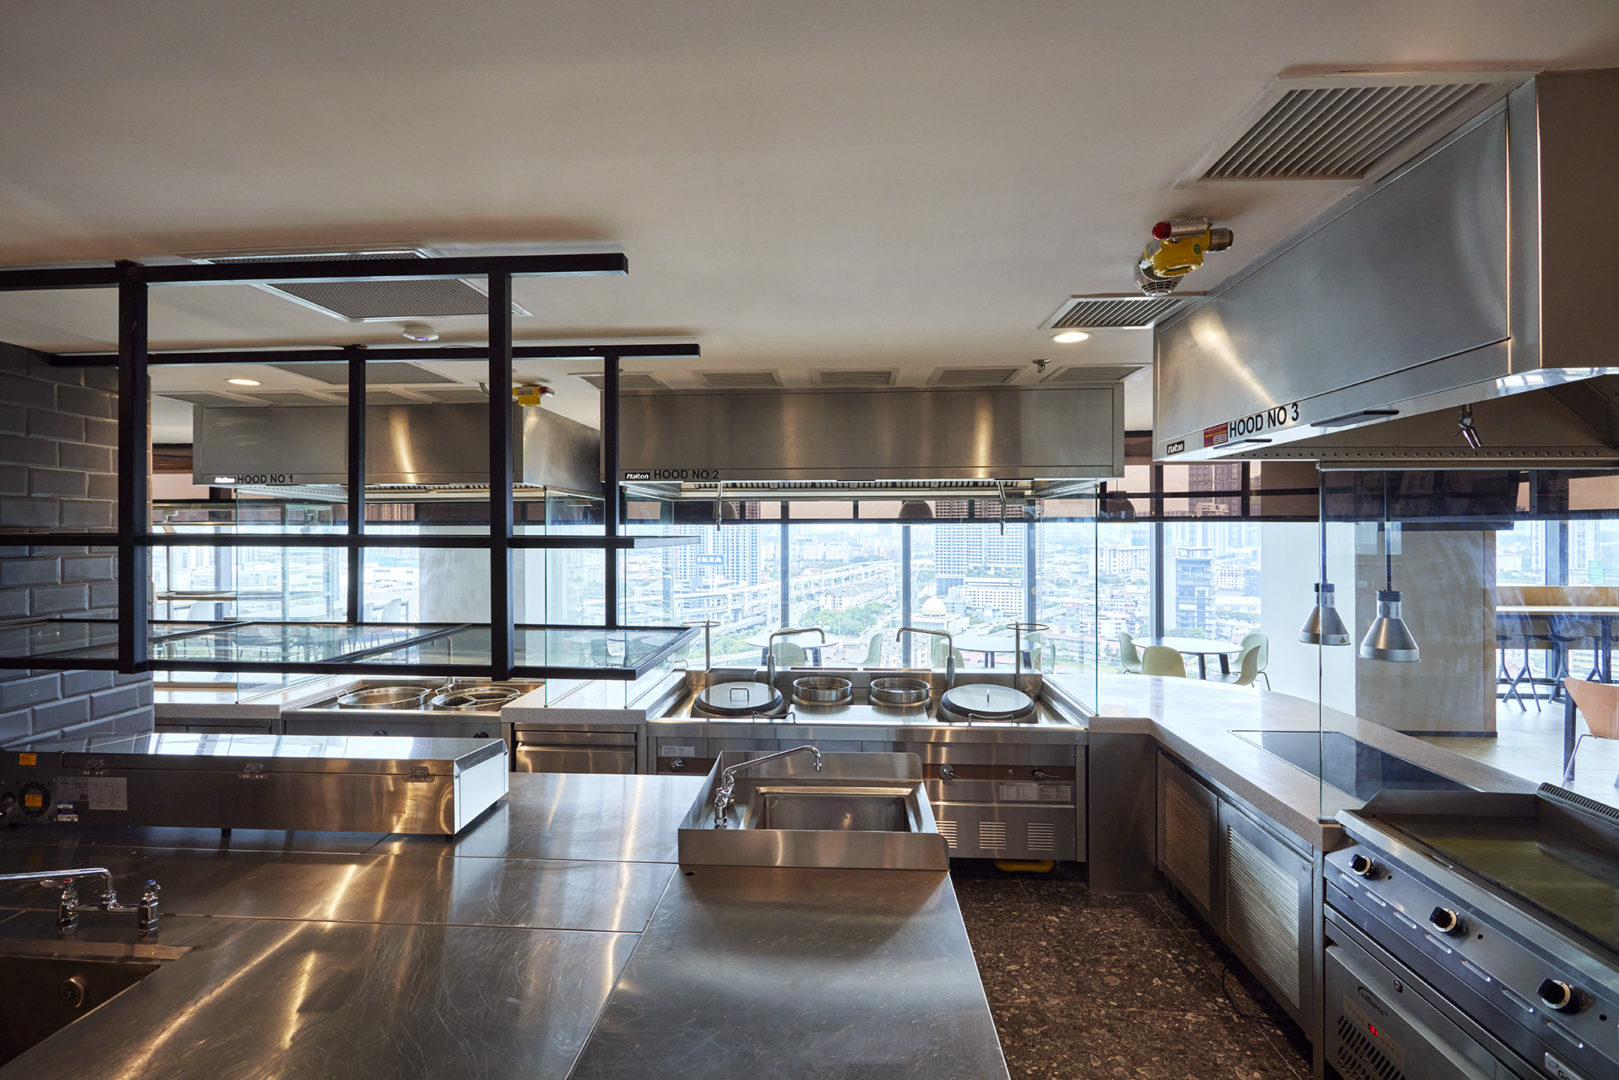 Menara HSBC has chosen Halton Solutions for the ventilation of their kitchens.